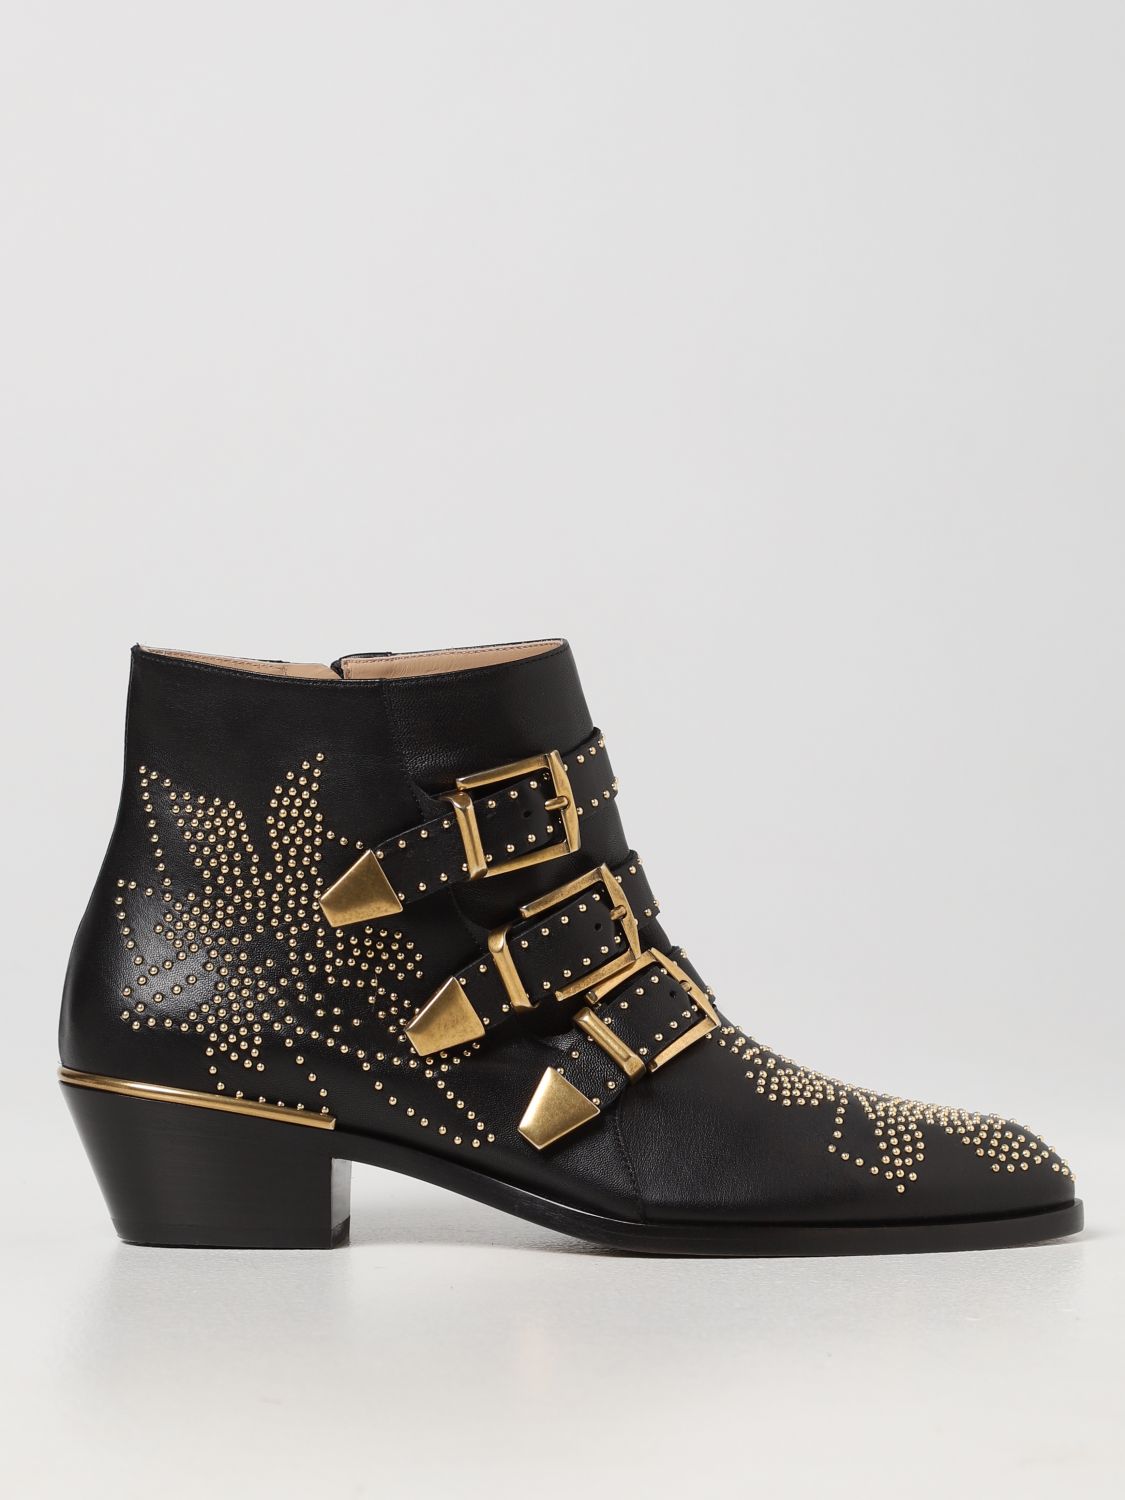 CHLOÉ: Chloé Susan leather ankle boots with micro studs - Black | CHLOÉ ...